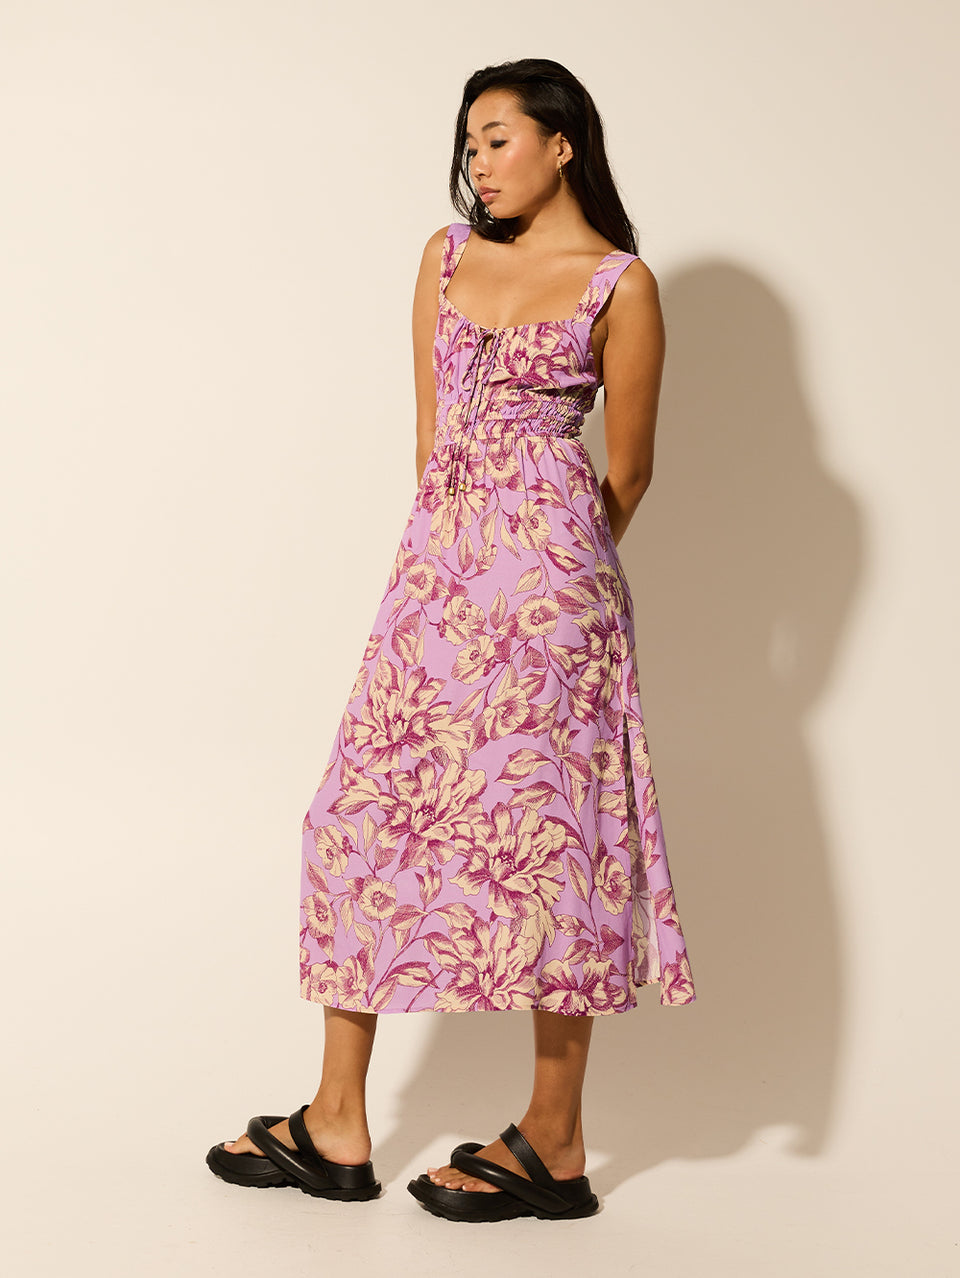 Reyna Strappy Midi Dress KIVARI | Model wears purple floral strappy midi dress side view